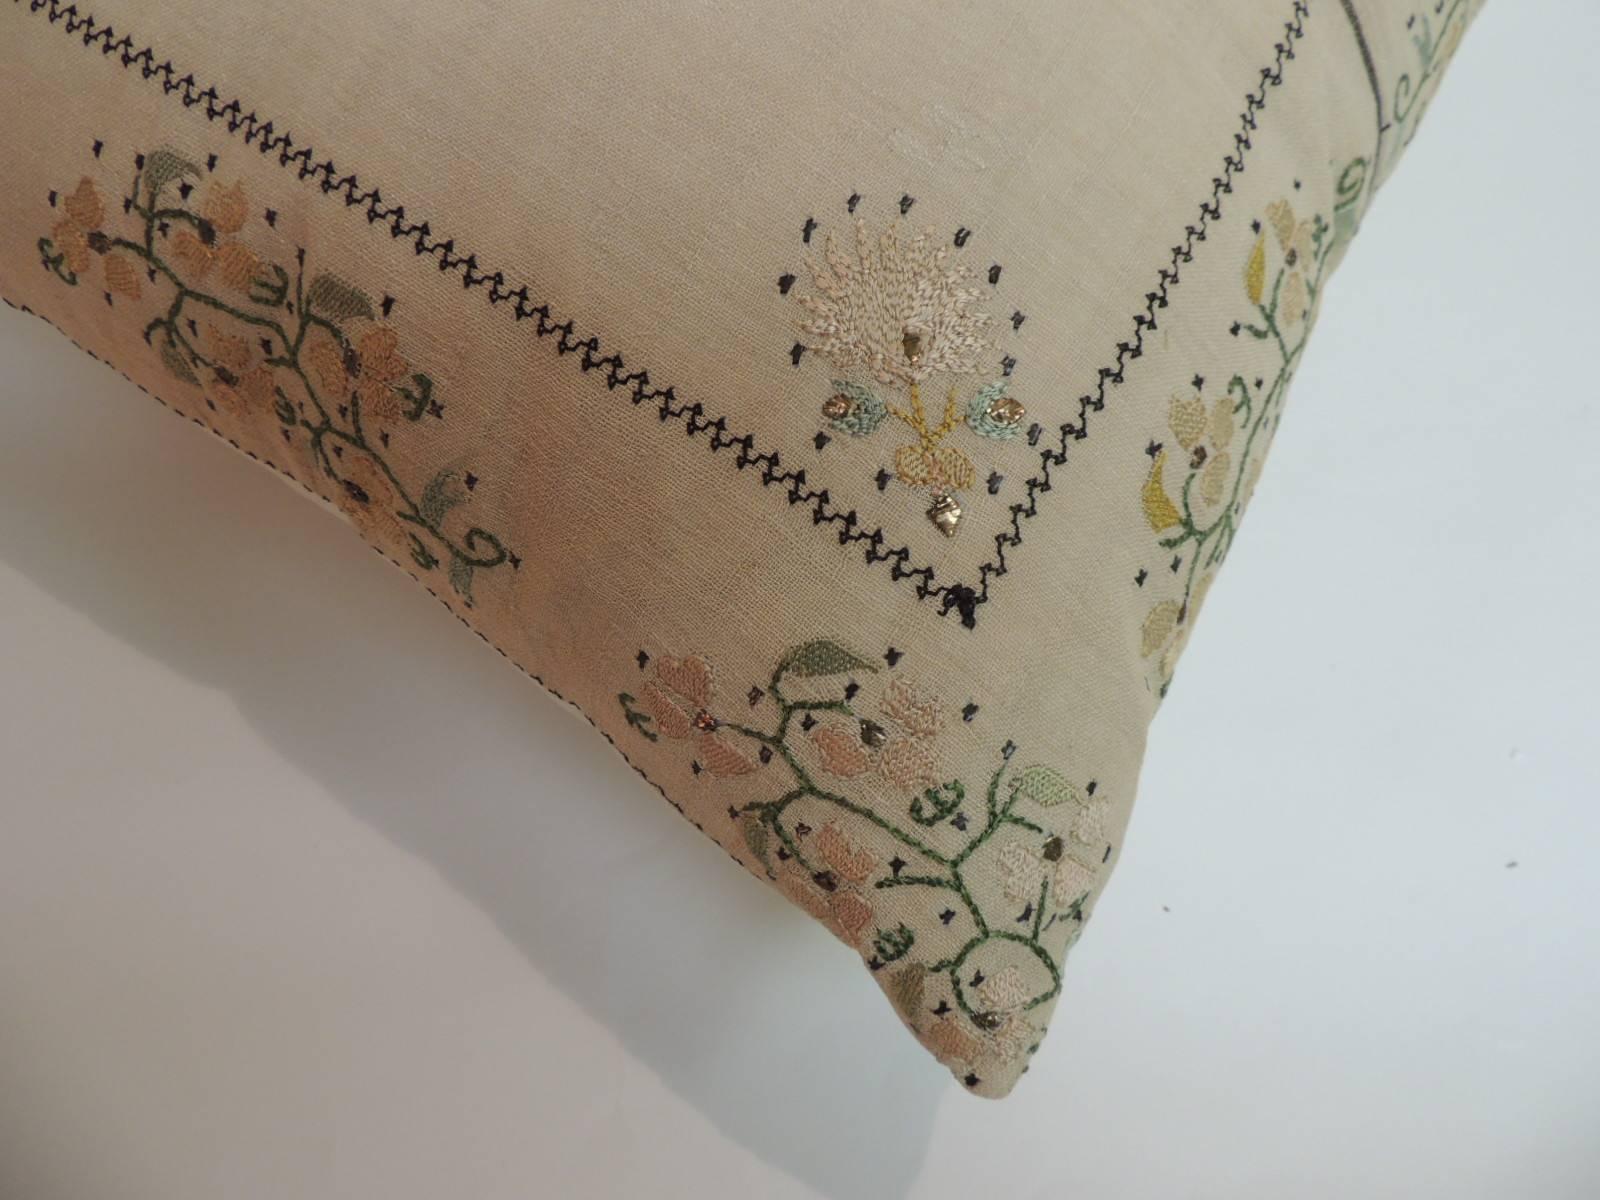 Moorish 19th Century Turkish Embroidered Linen Square Decorative Pillow